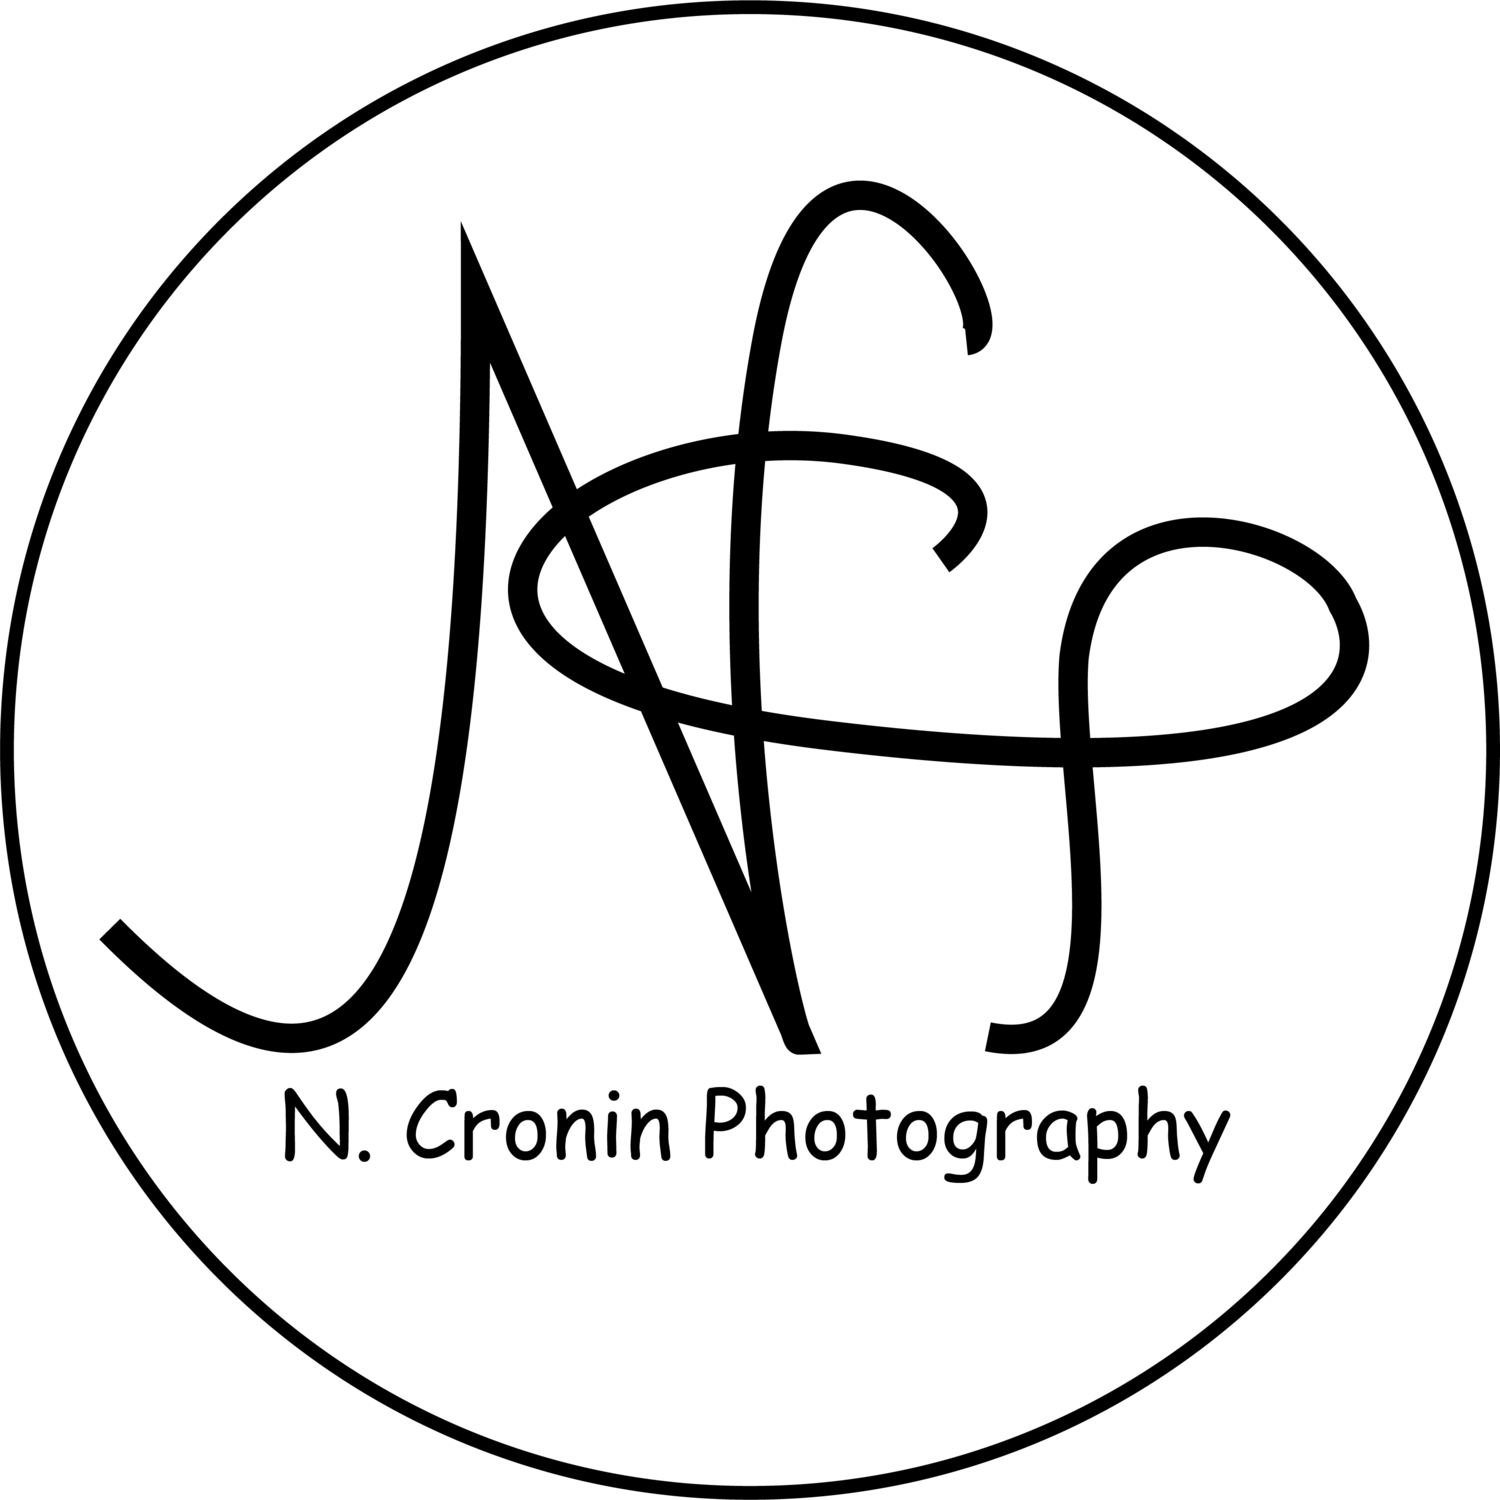 N. Cronin Photography